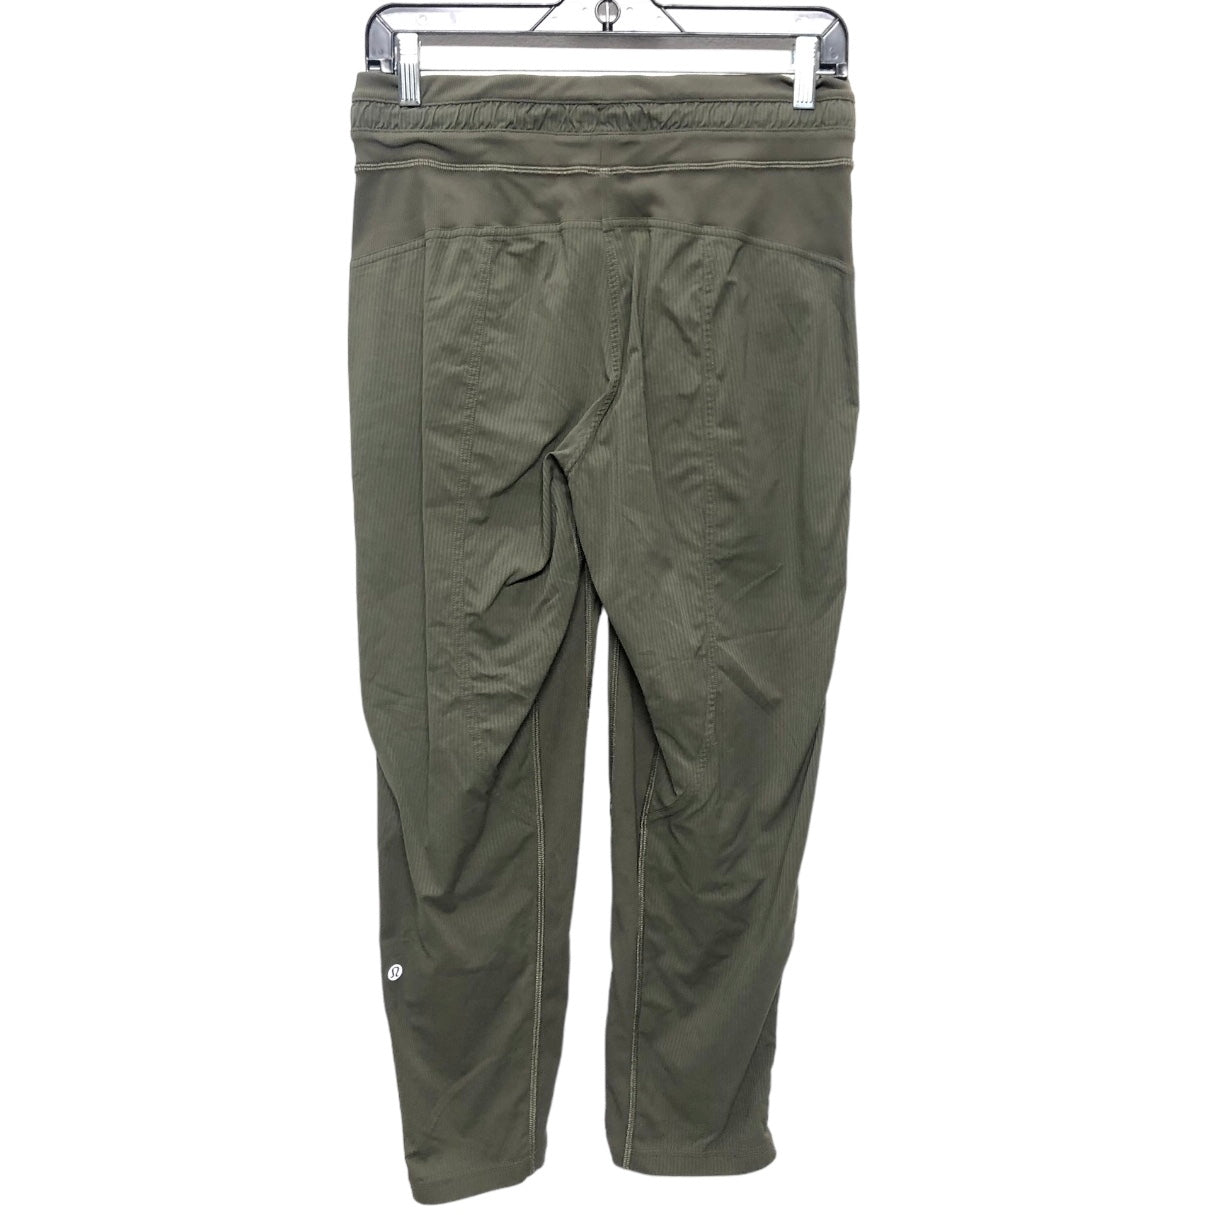 Green Athletic Pants Lululemon, Size 6